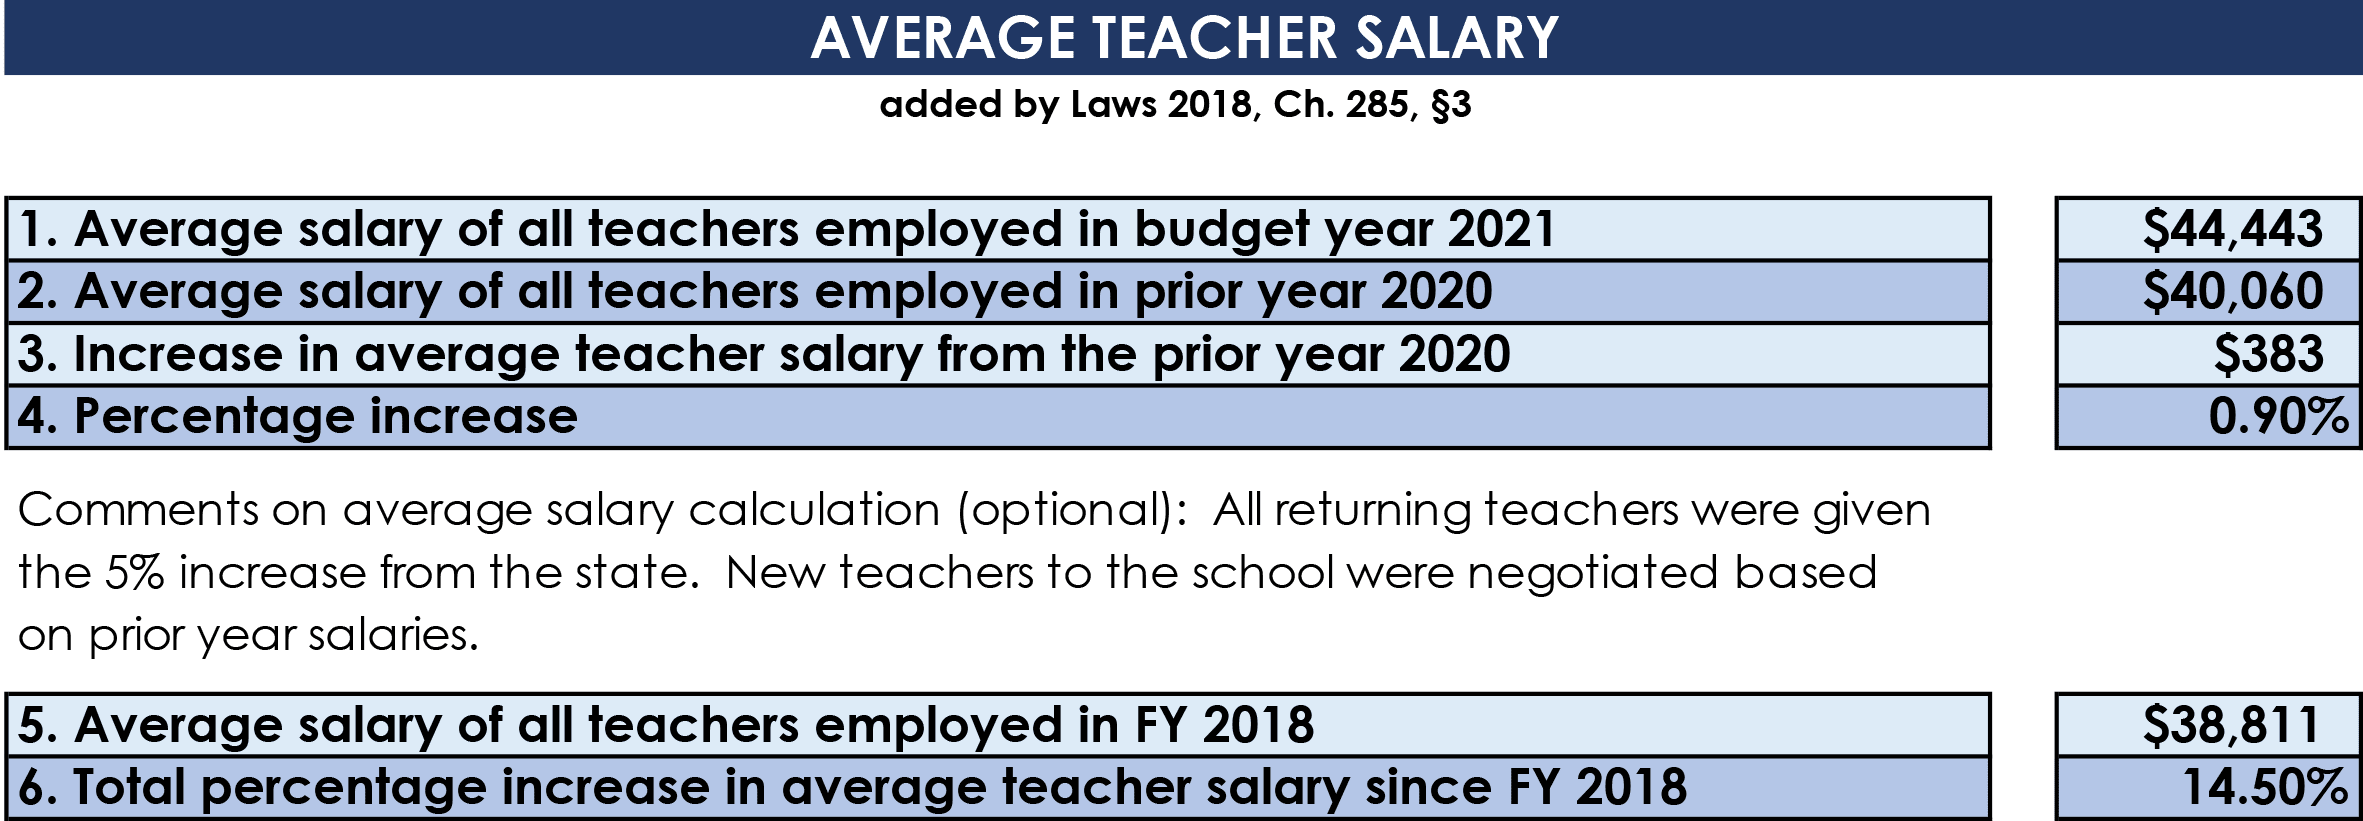 Average Teacher Salary